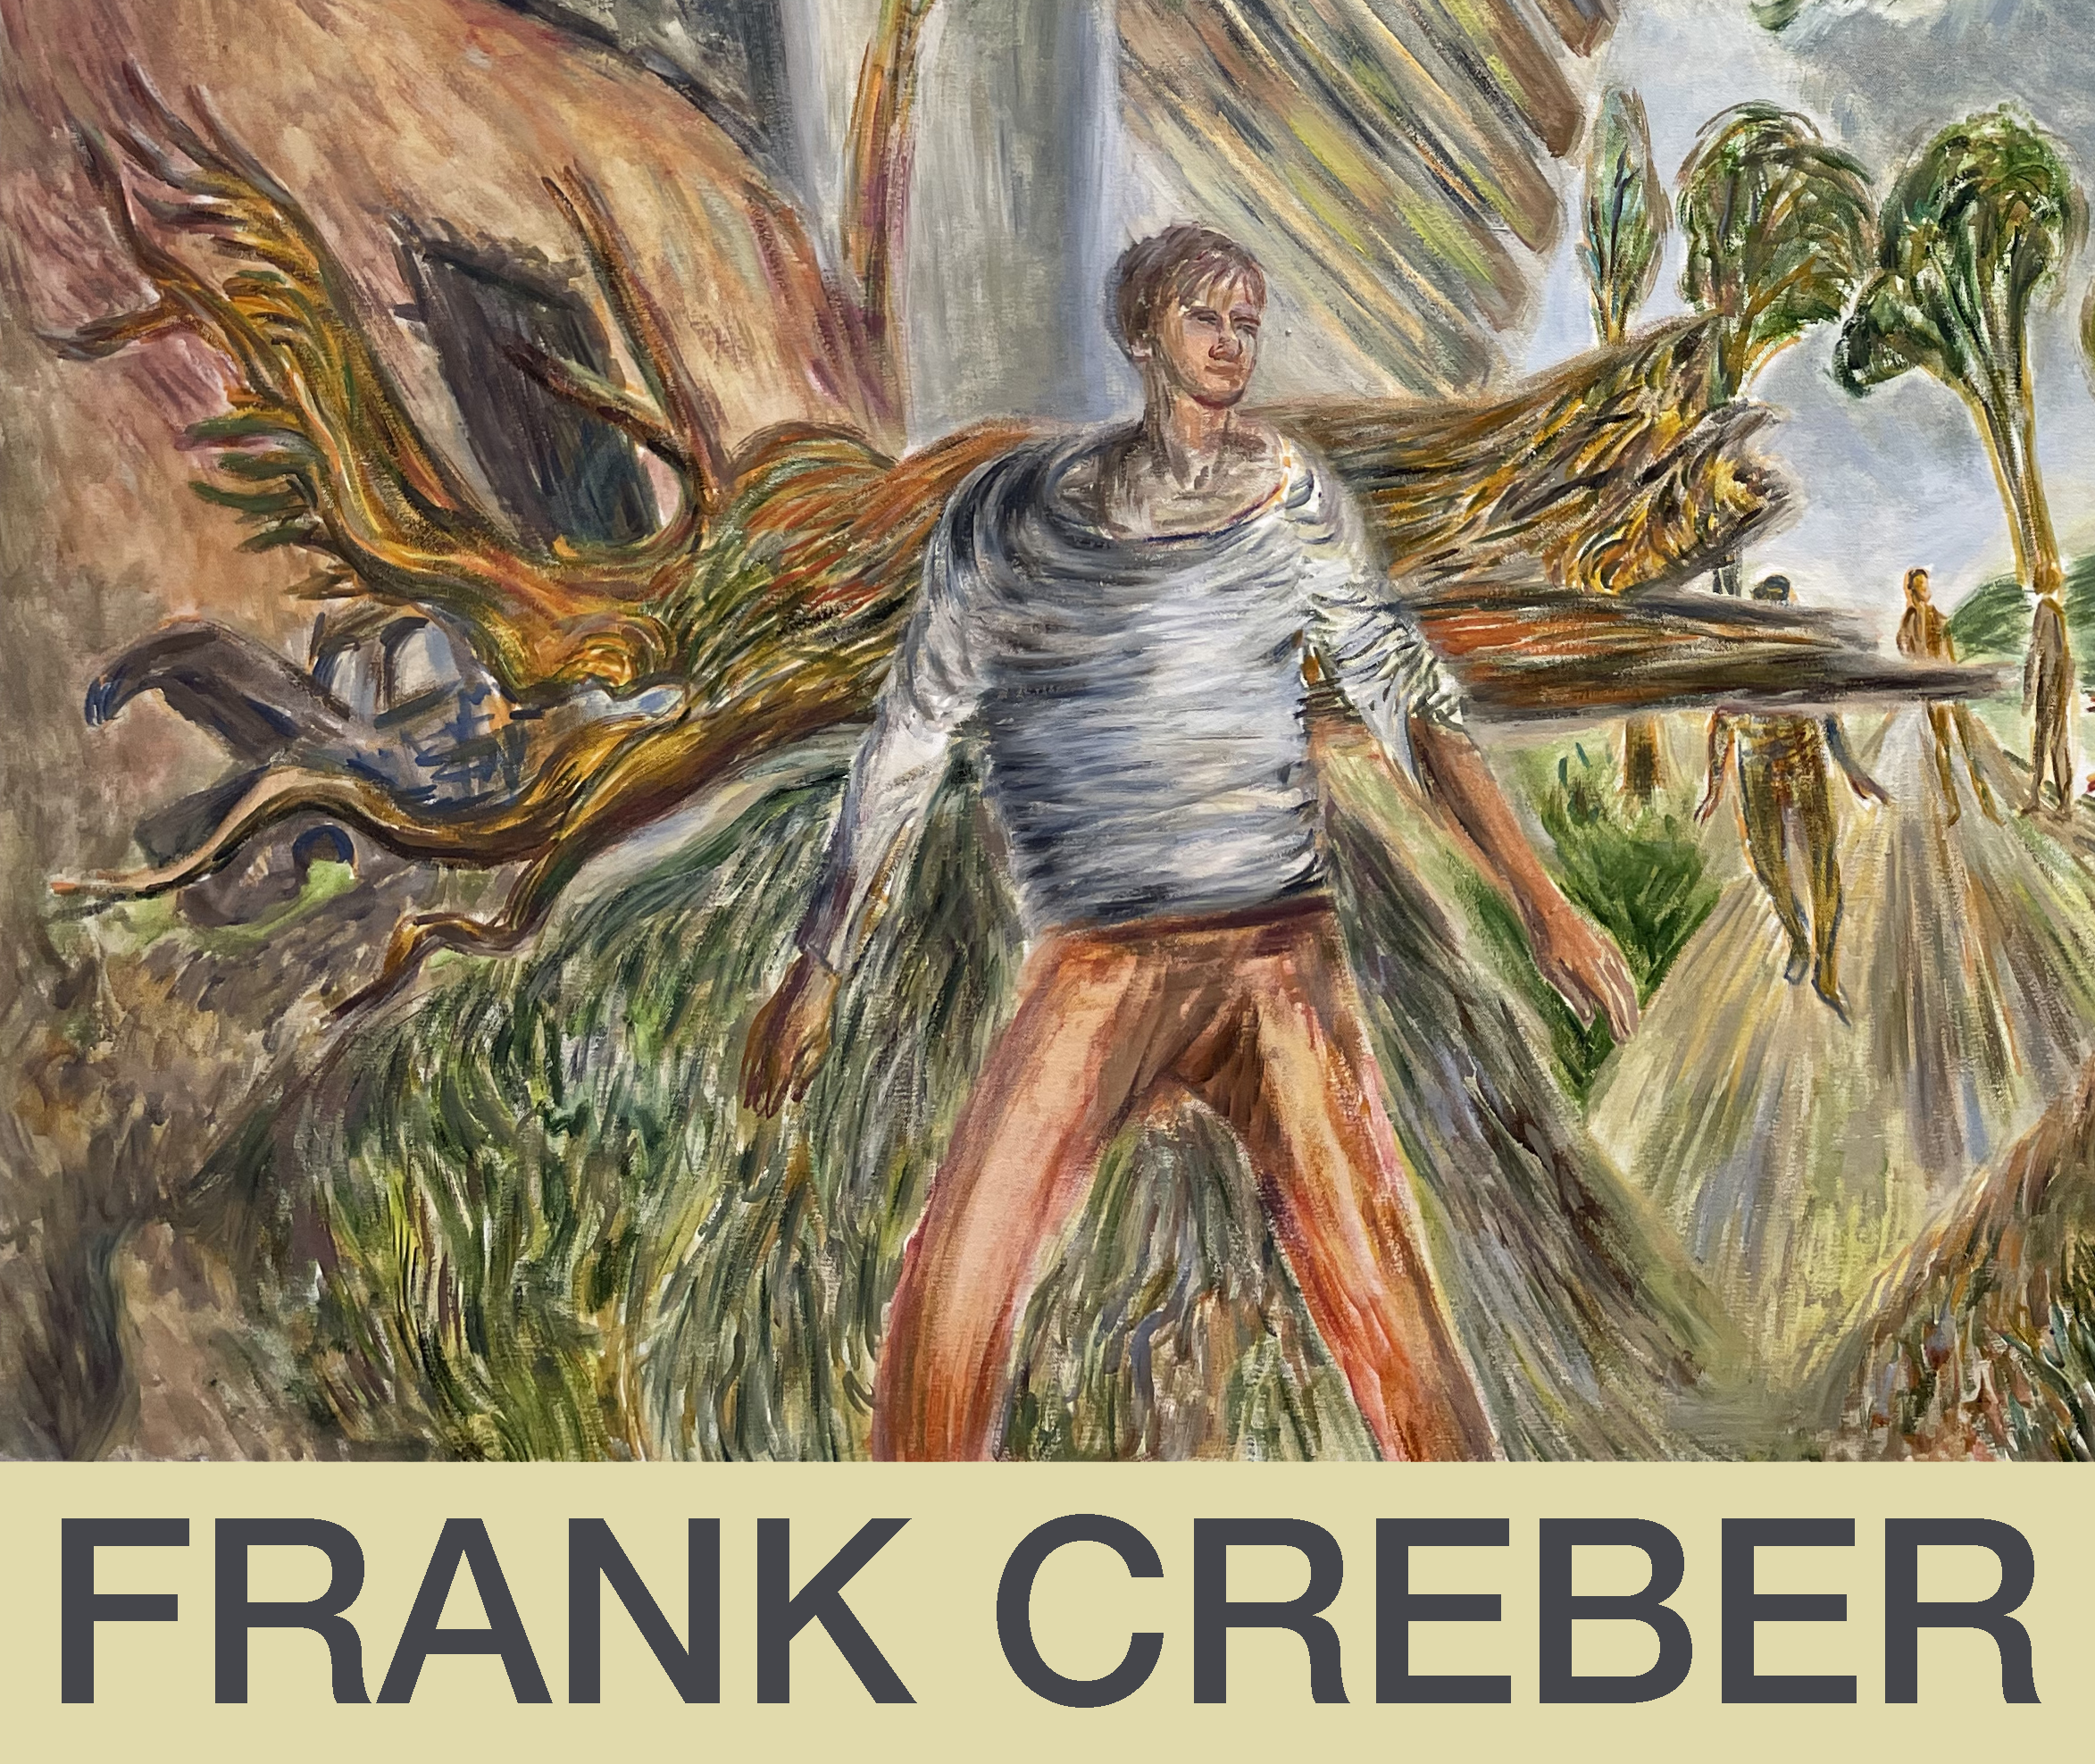 Frank Creber